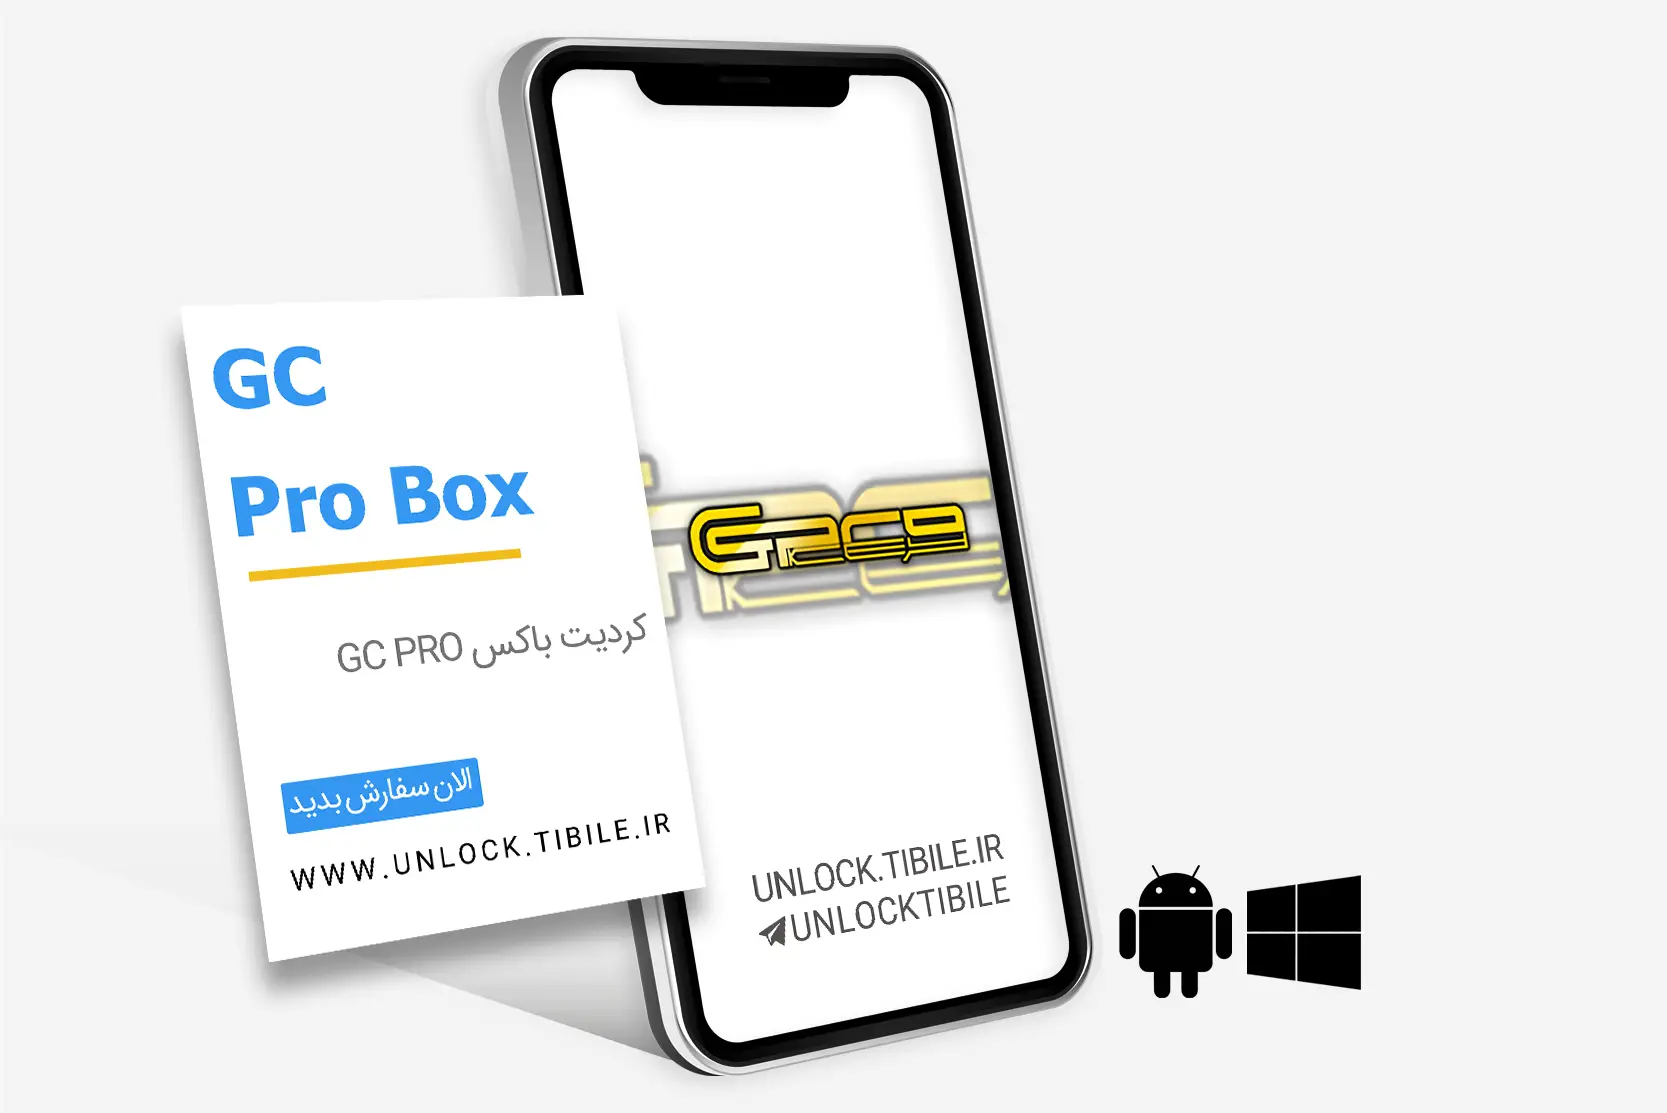 GC Pro Box